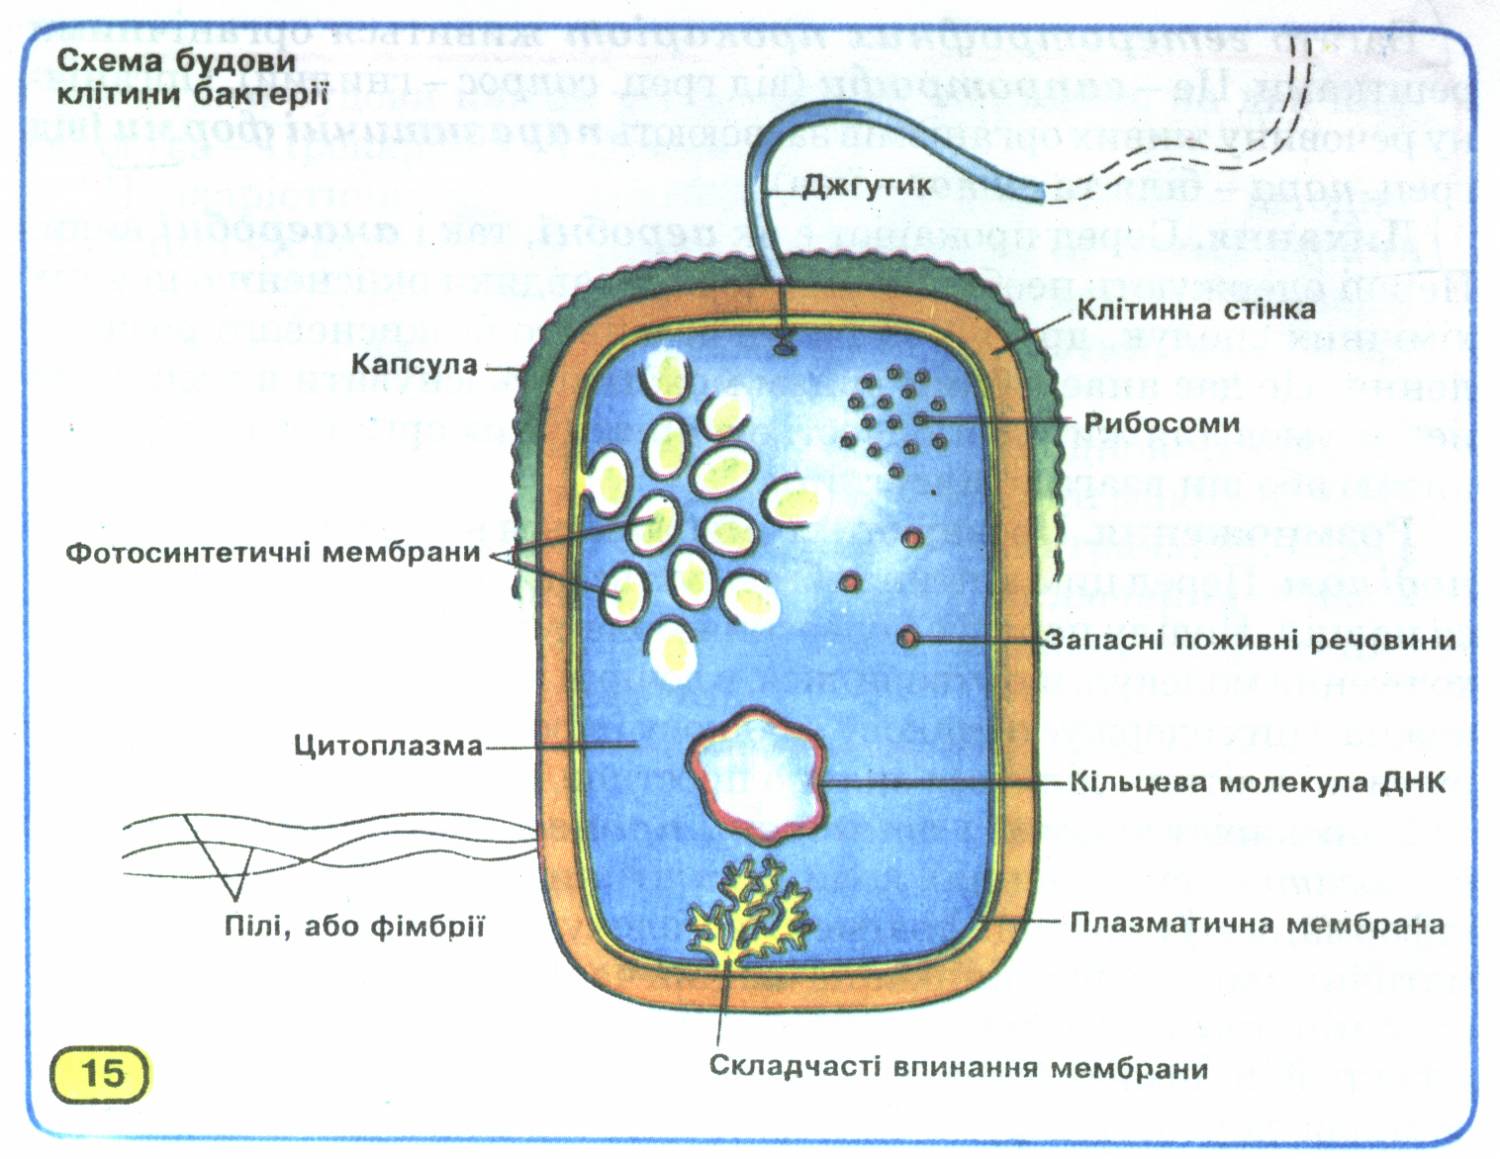 Оболочка клетки прокариота. Бактерии прокариоты. Строение прокариотической клетки. Бактеріальна клітина. Структура прокариотической клетки.